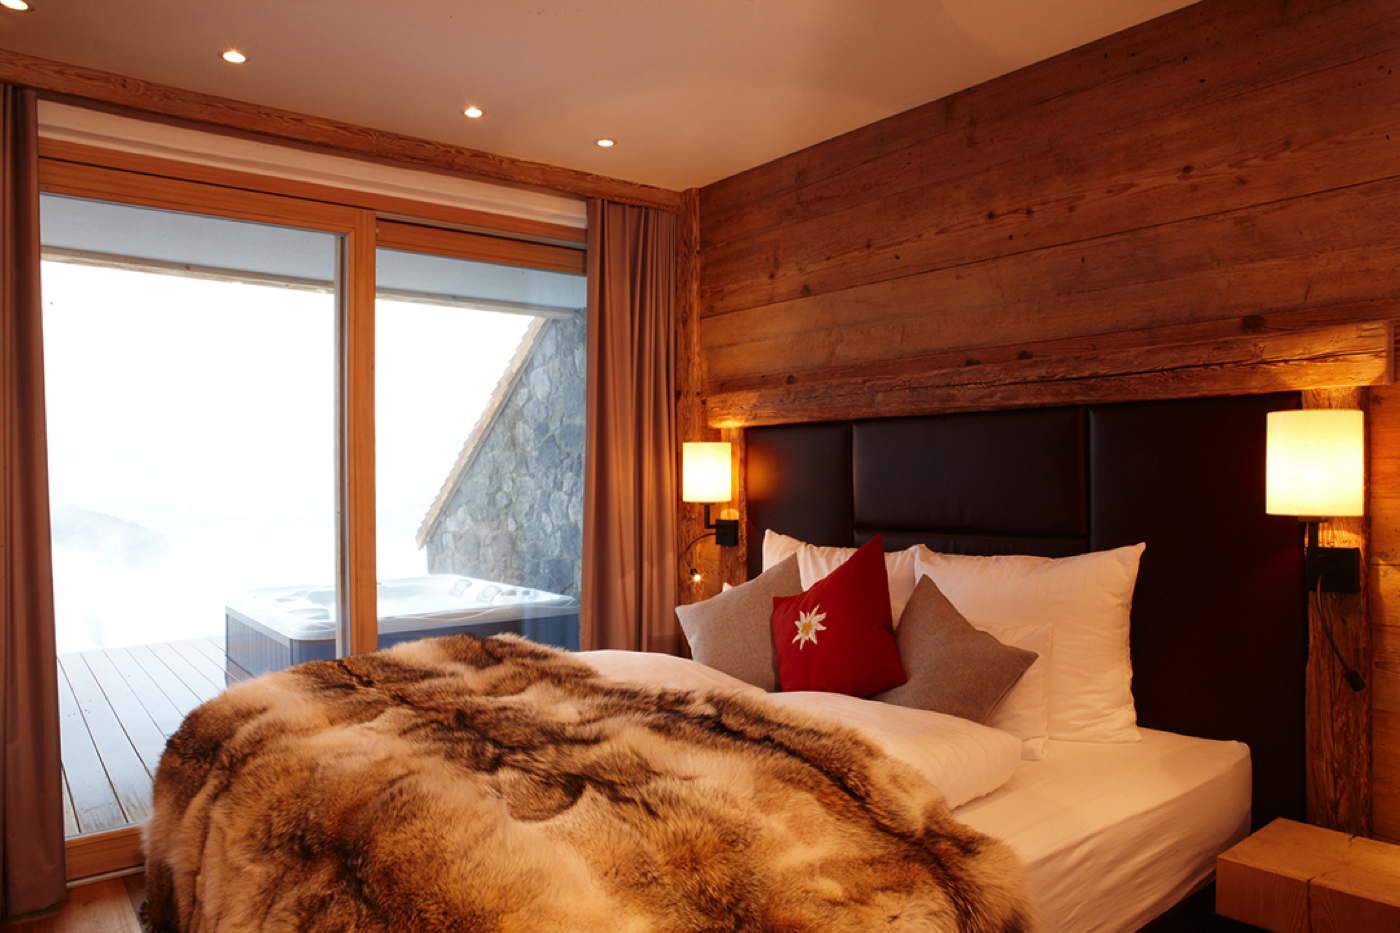 Austria-Kitzbühel-chalet-cottage-skiing lodge-design hotel-charming skiing hotel